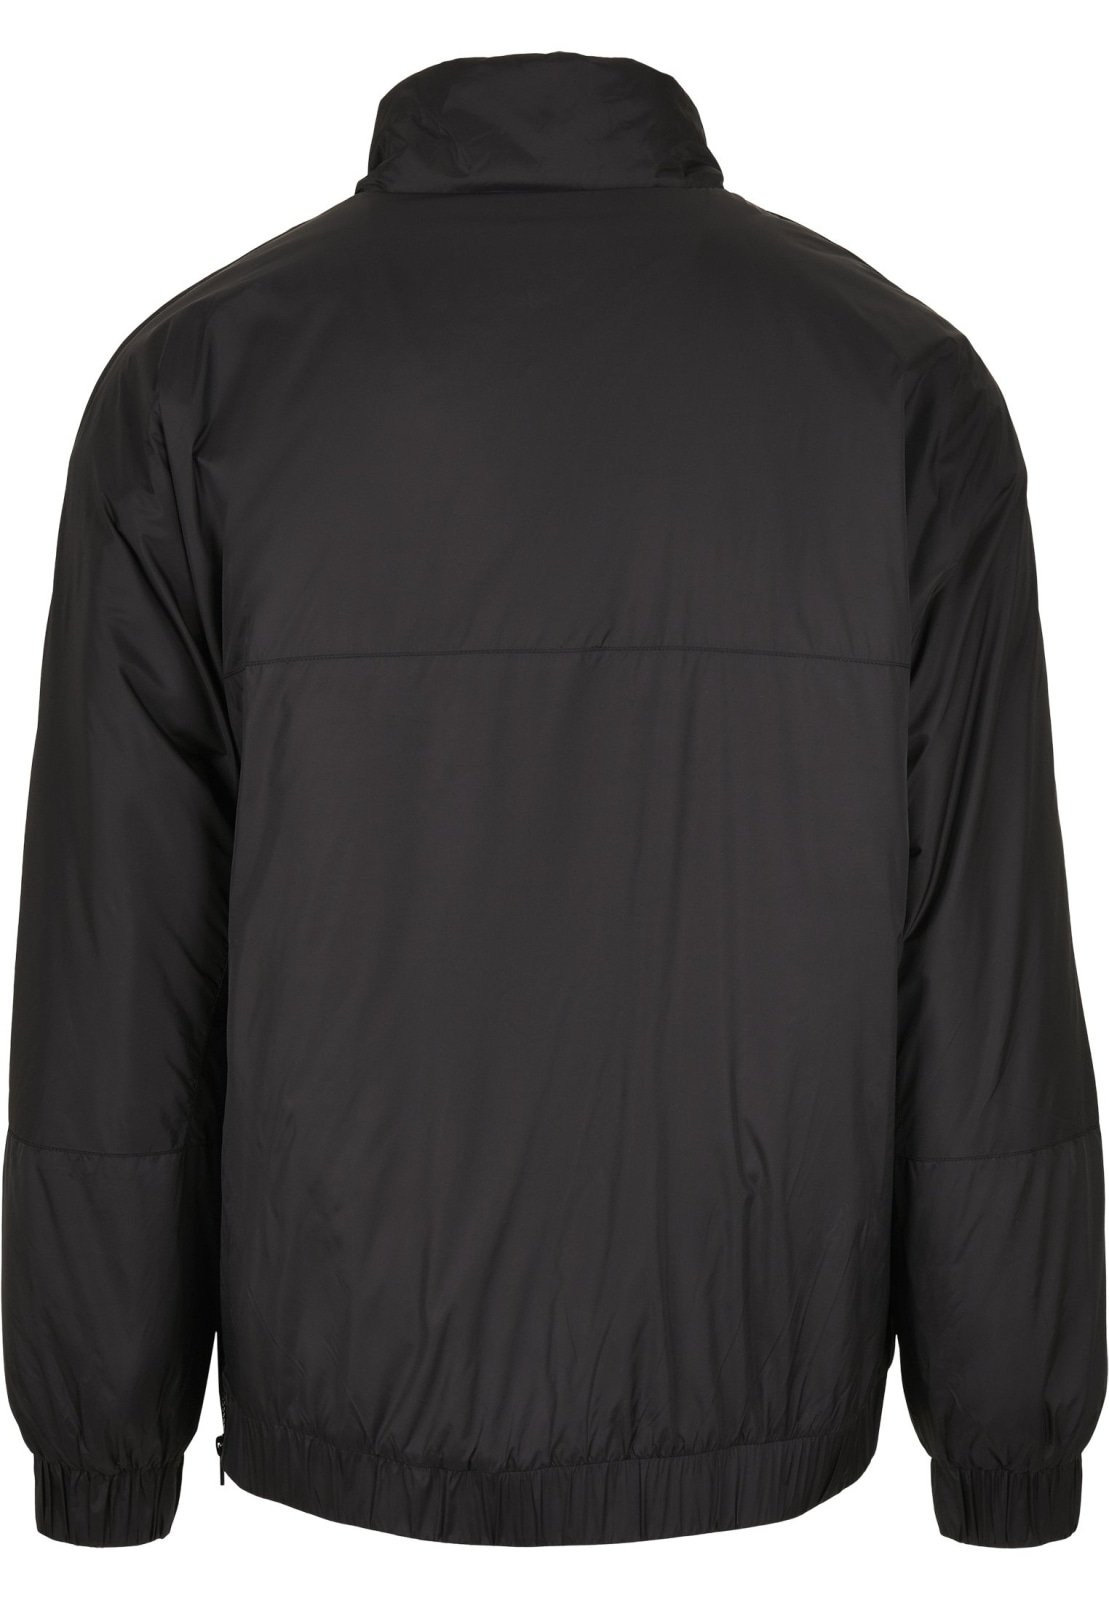 Starter Color Block Half Zip Retro Jacket - Black White Red Gold - Norvine